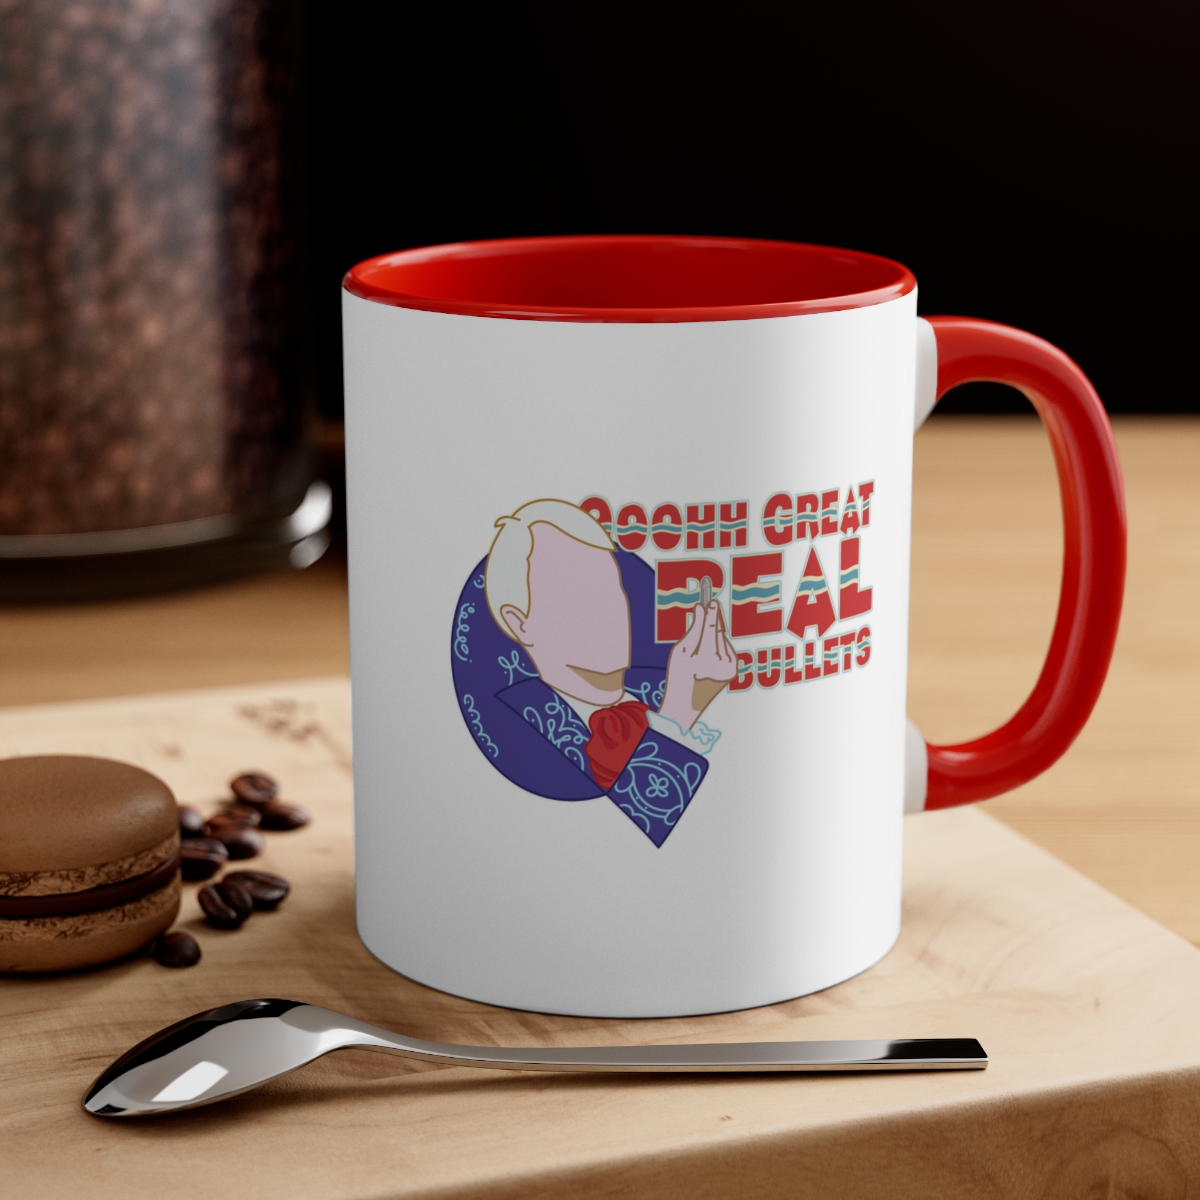 Real Bullets - Accent Coffee Mug, 11oz